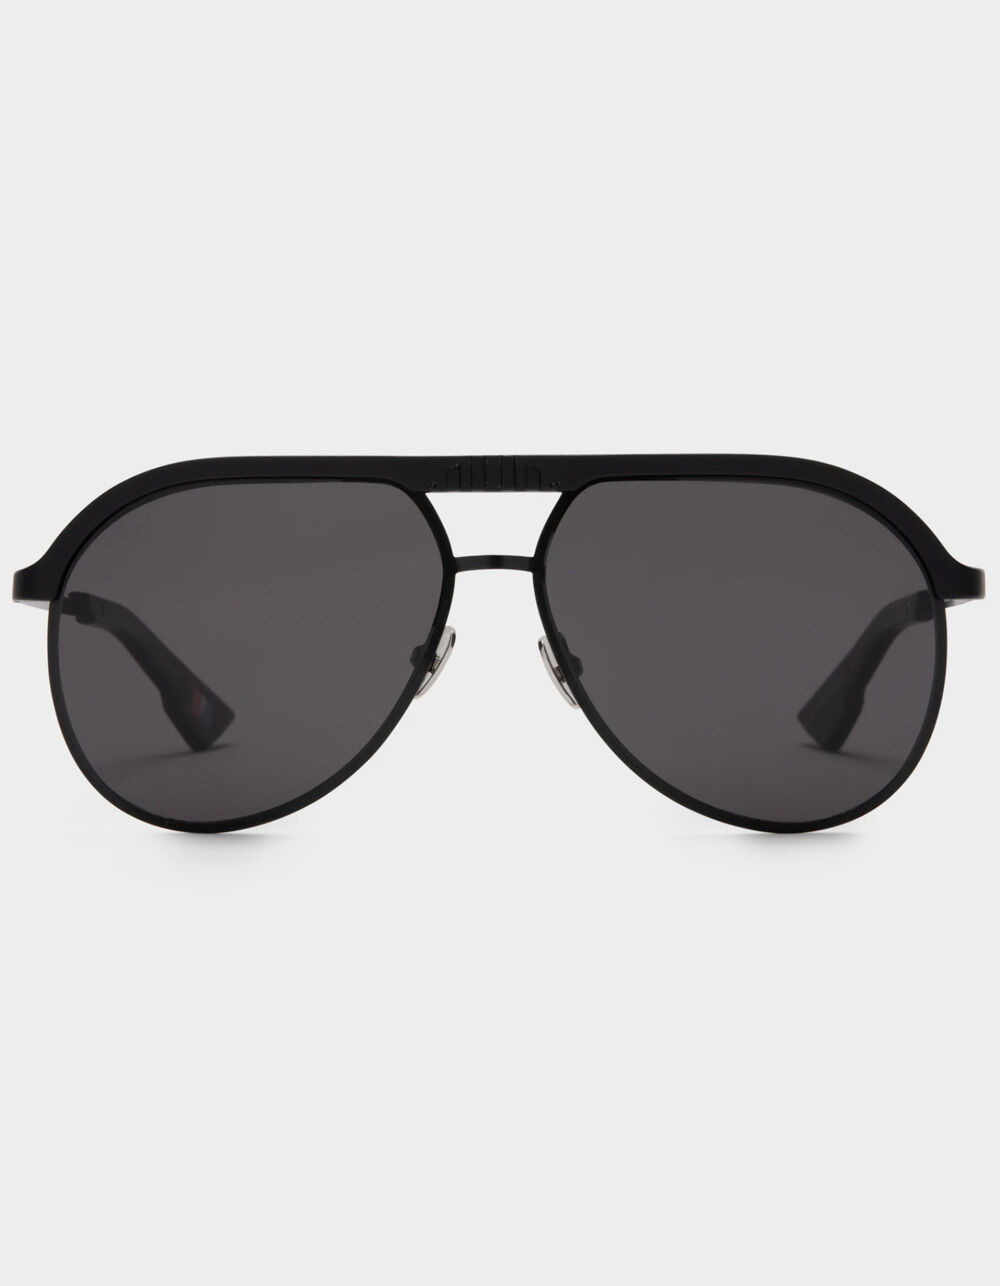 DIFF EYEWEAR x Star Wars Darth Vader Polarized Sunglasses - BLACK | Tillys